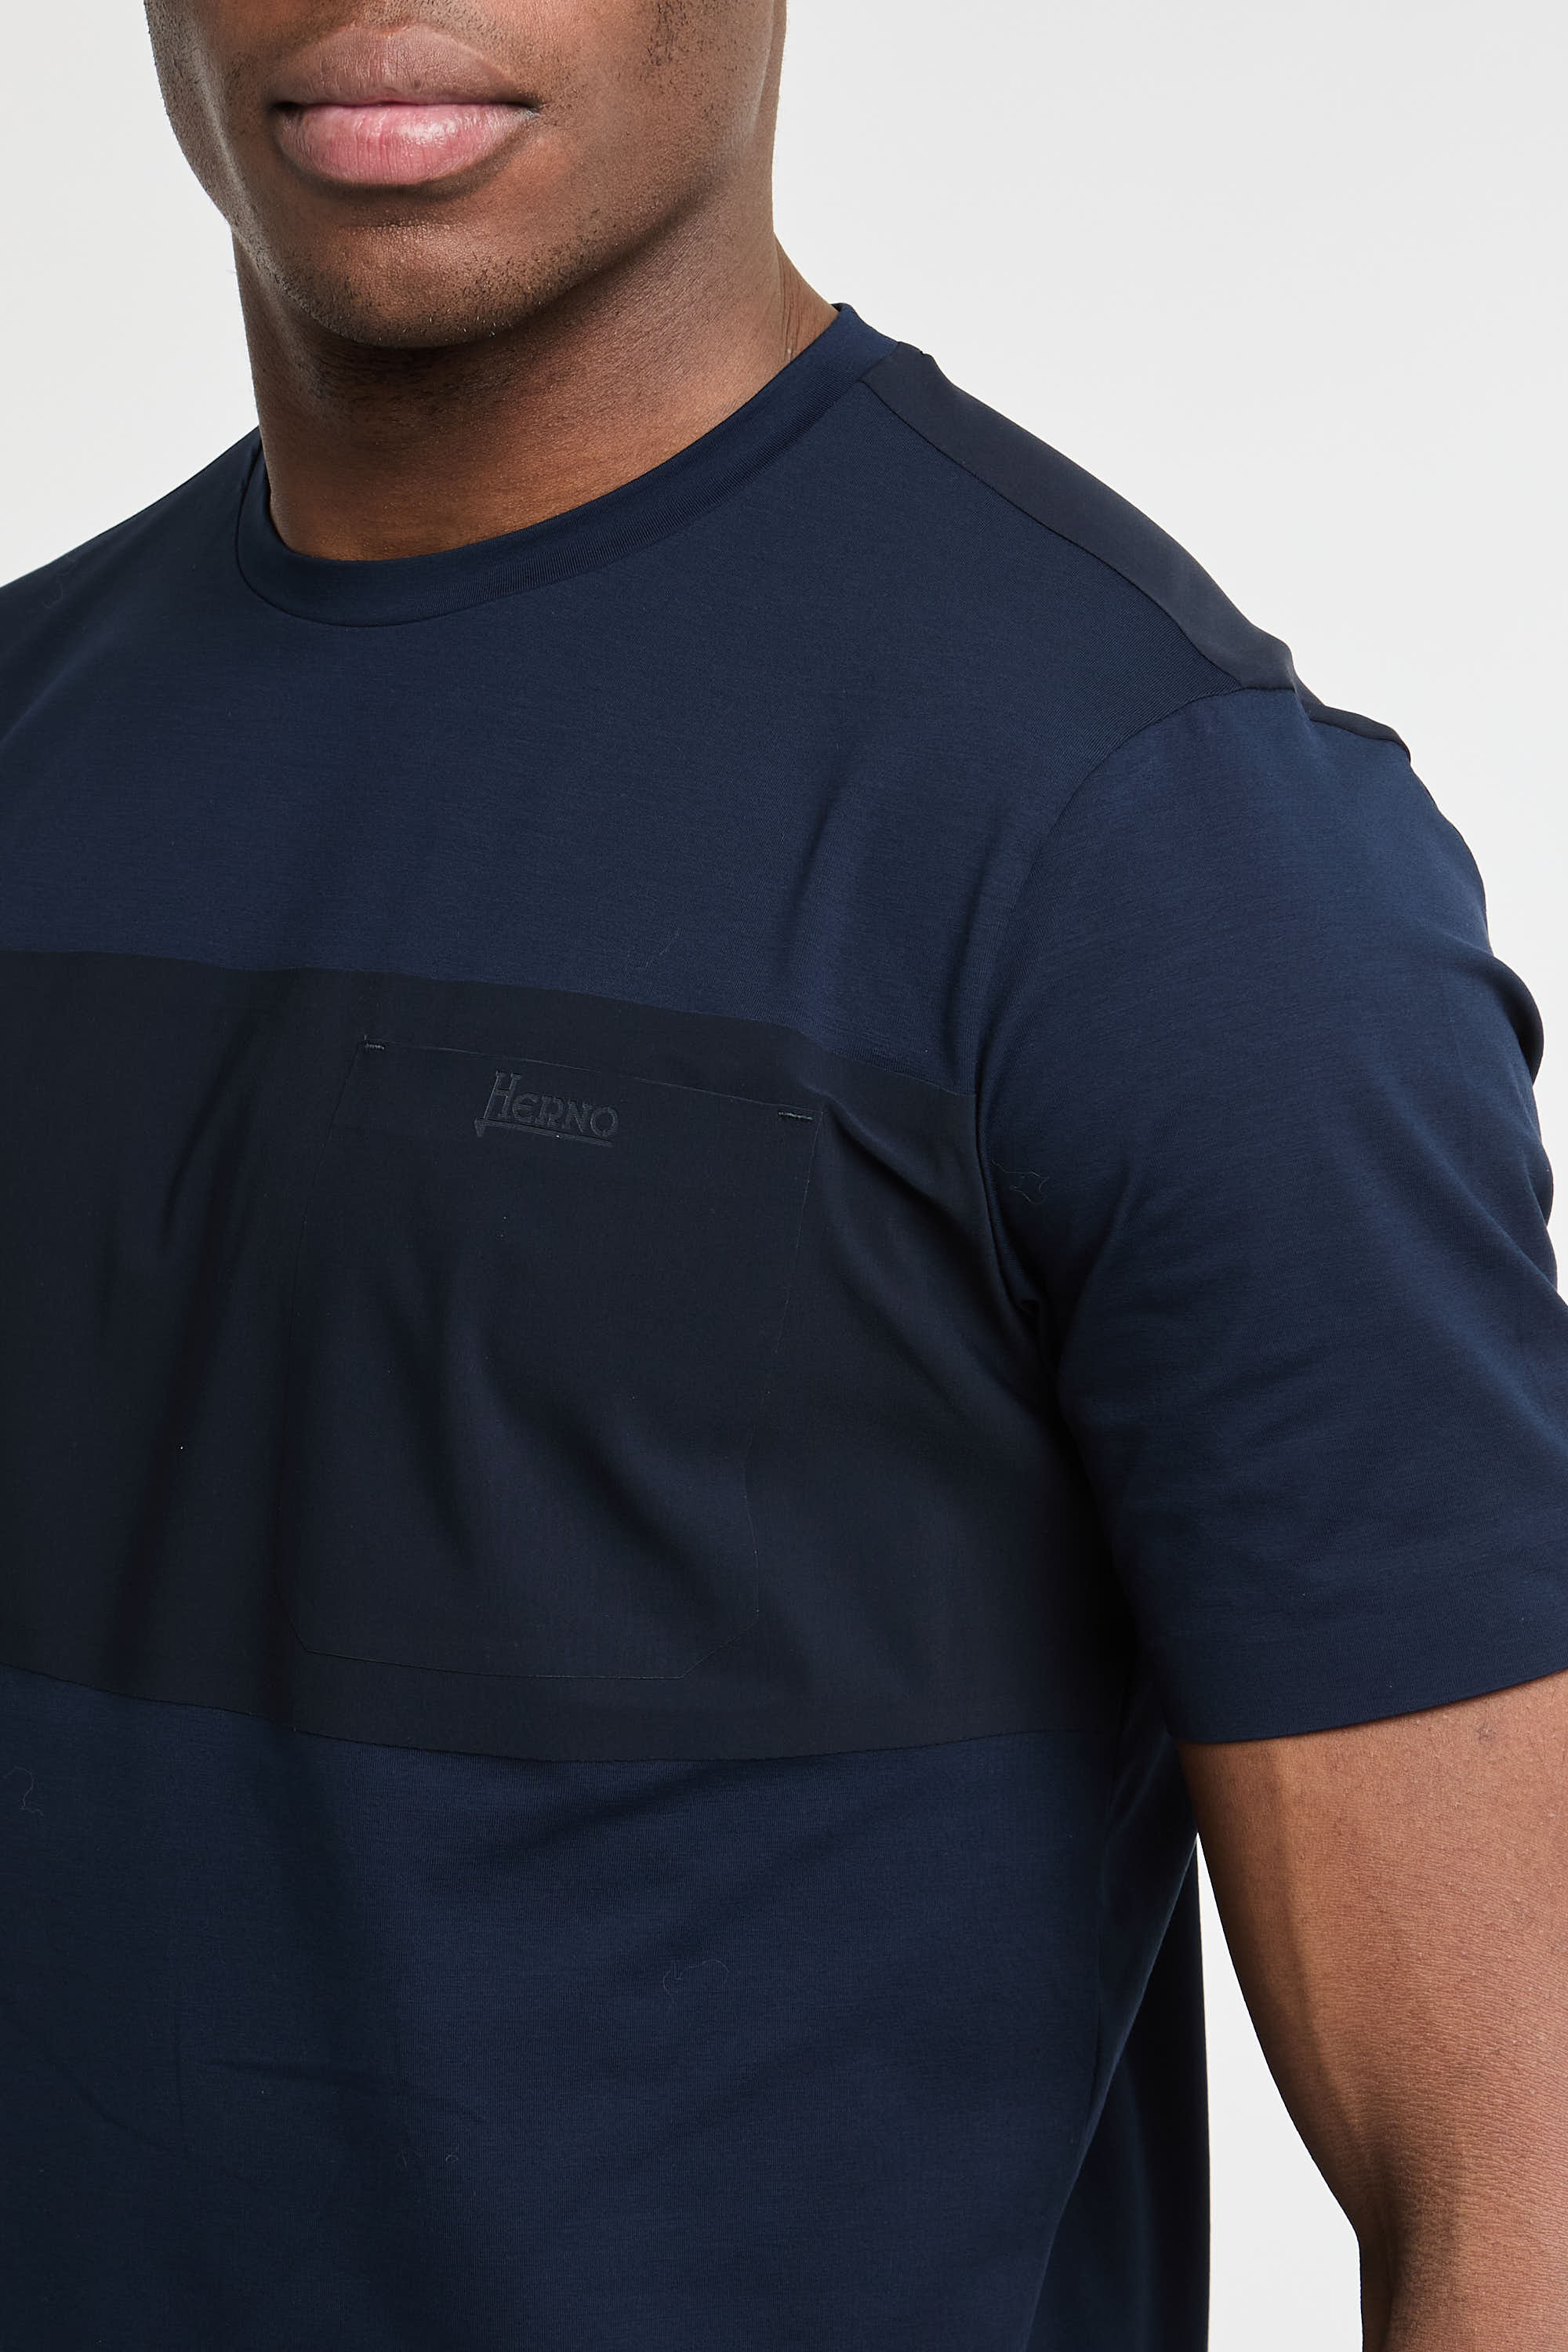 Herno T-Shirt Superfine Cotton/Stretch & Light Scuba Blue-1